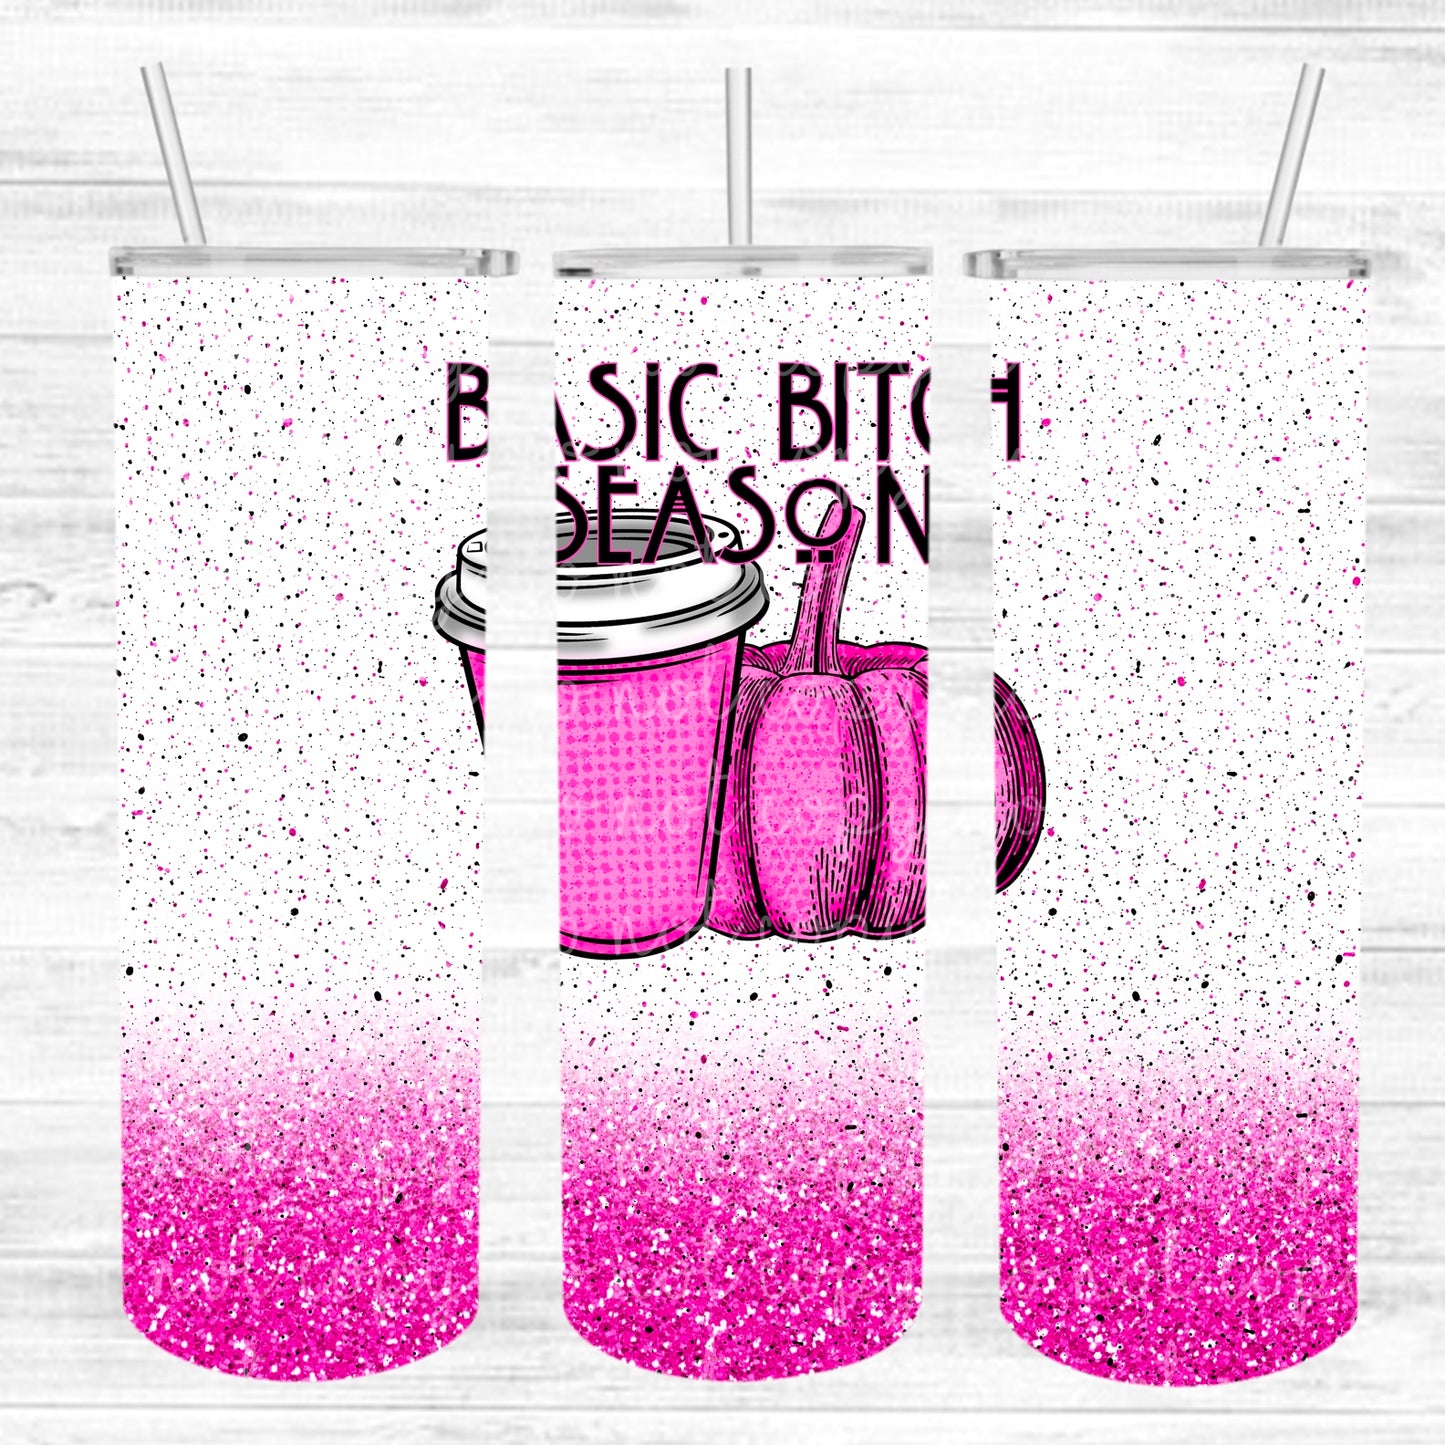 Basic B!tch Season Pink Pumpkins Tumbler #